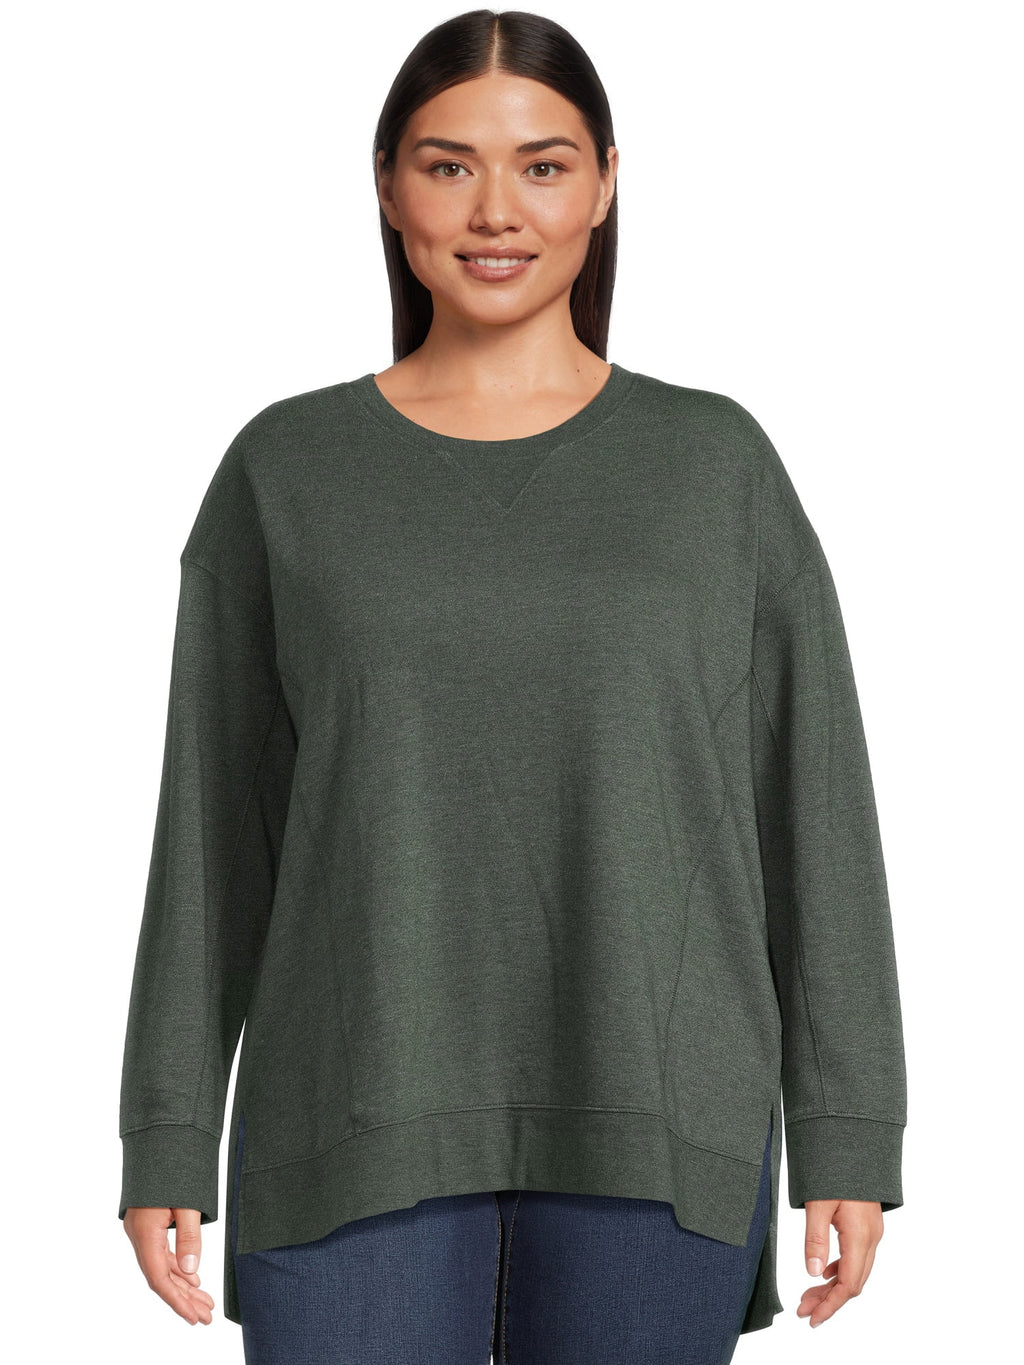 Terra & Sky Women's Plus High-Low French Terrycloth Sweatshirt - image 1 of 5